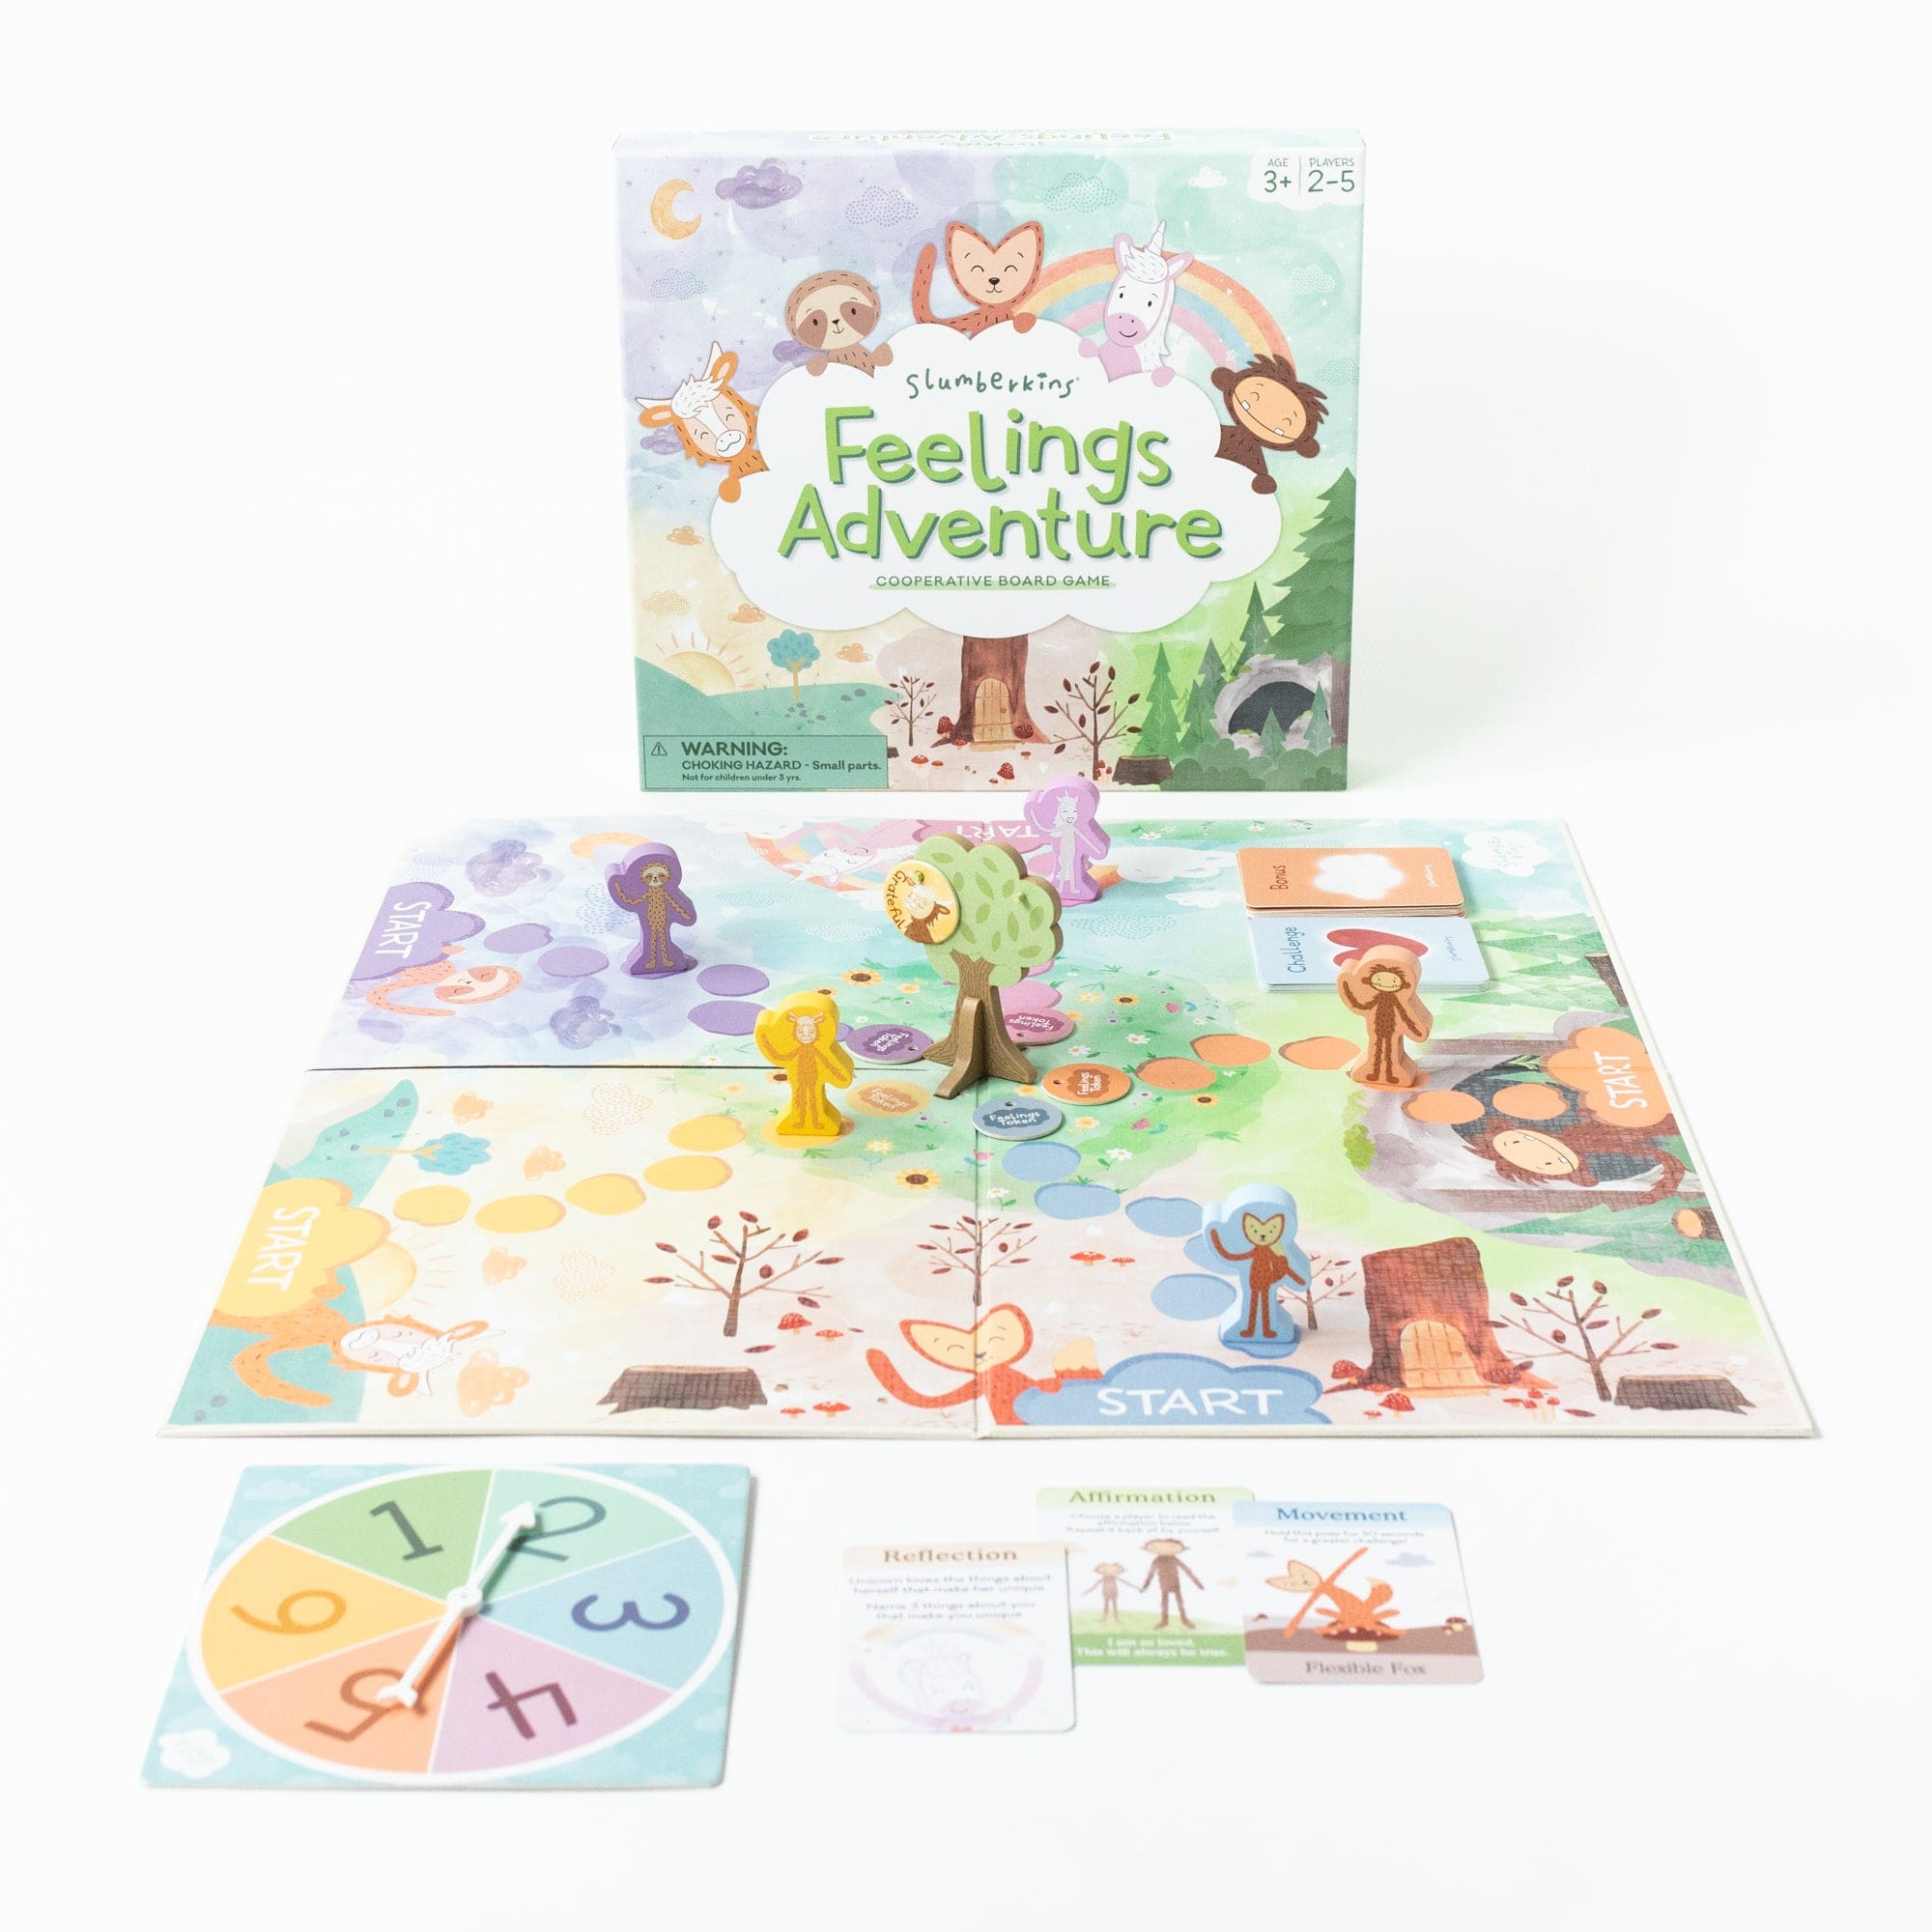 Feelings Adventure Board Game Featured Image